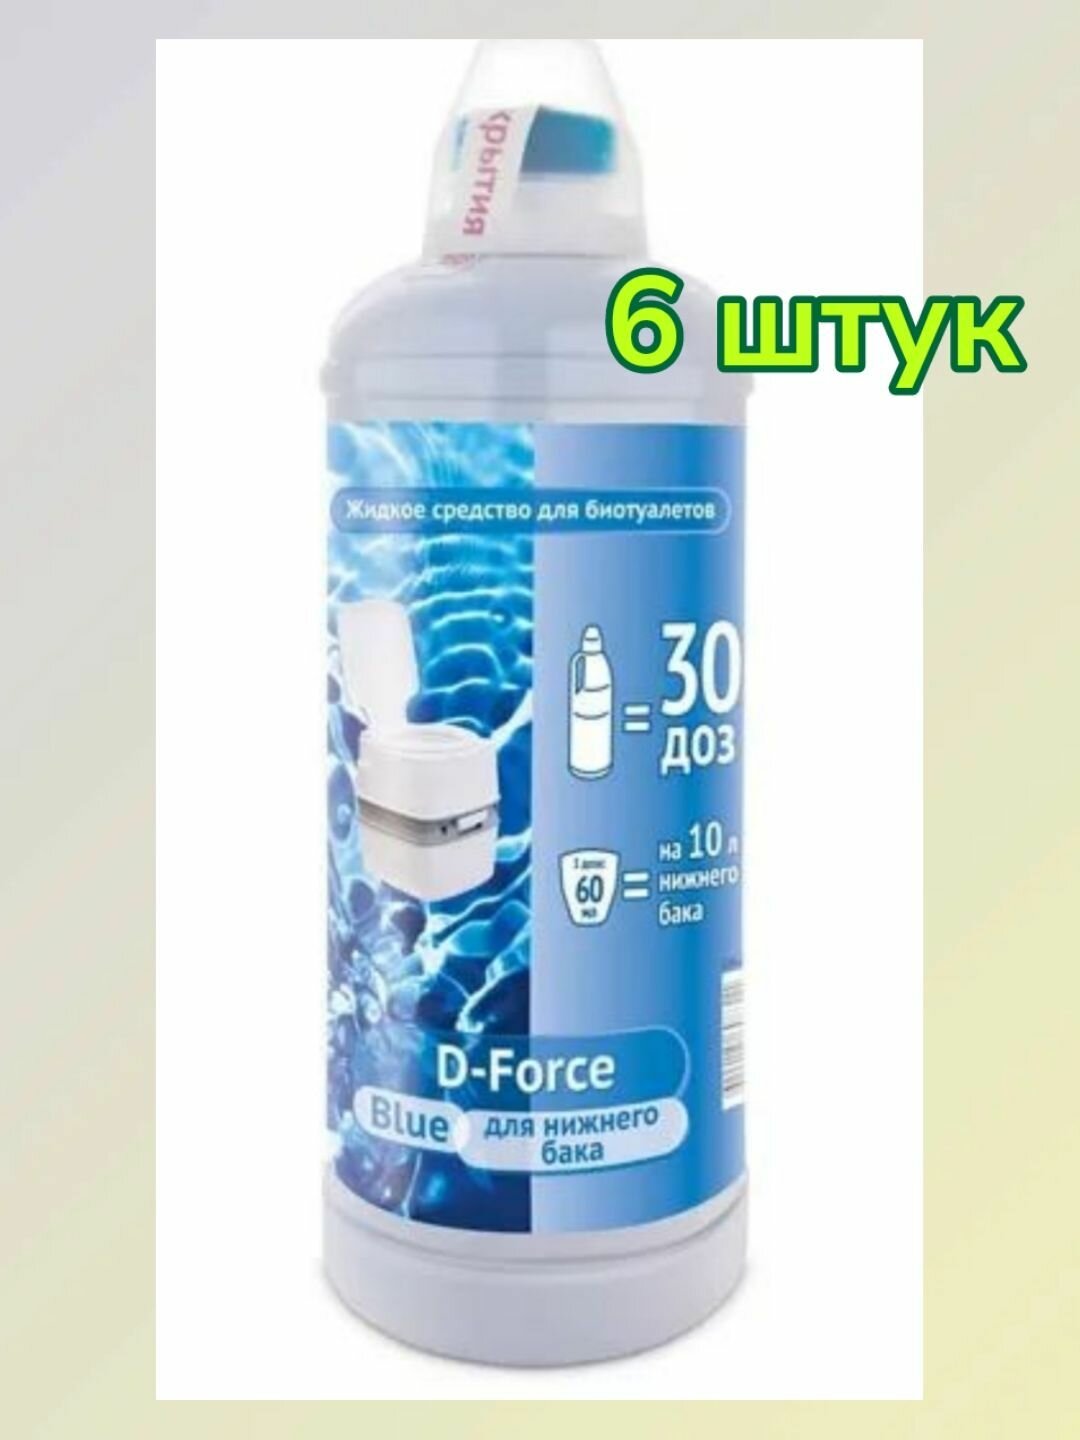 D-Force Blue, жидкое средство для биотуалетов, для нижнего бака 1,8л, 6 штук - фотография № 1